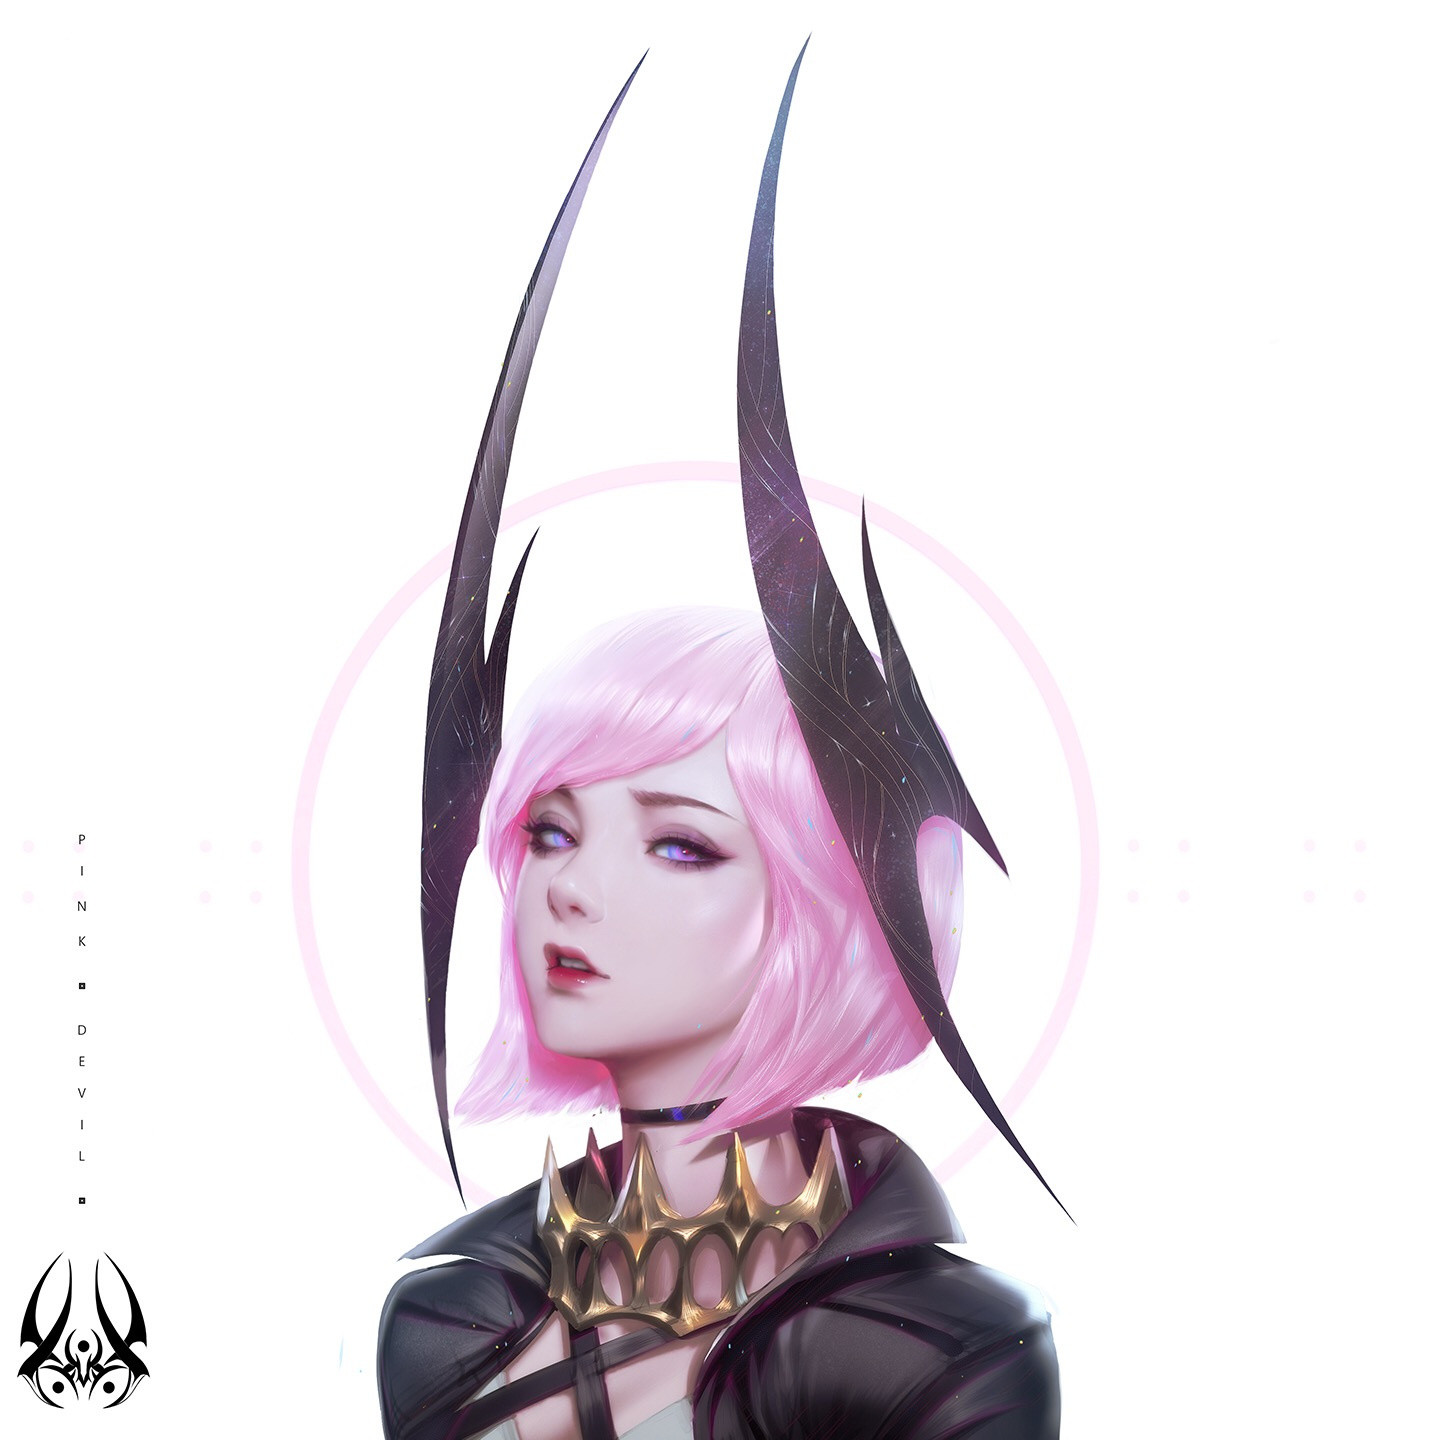 General 1440x1440 Zeronis artwork CGI fantasy girl pink hair short hair lipstick white background digital art